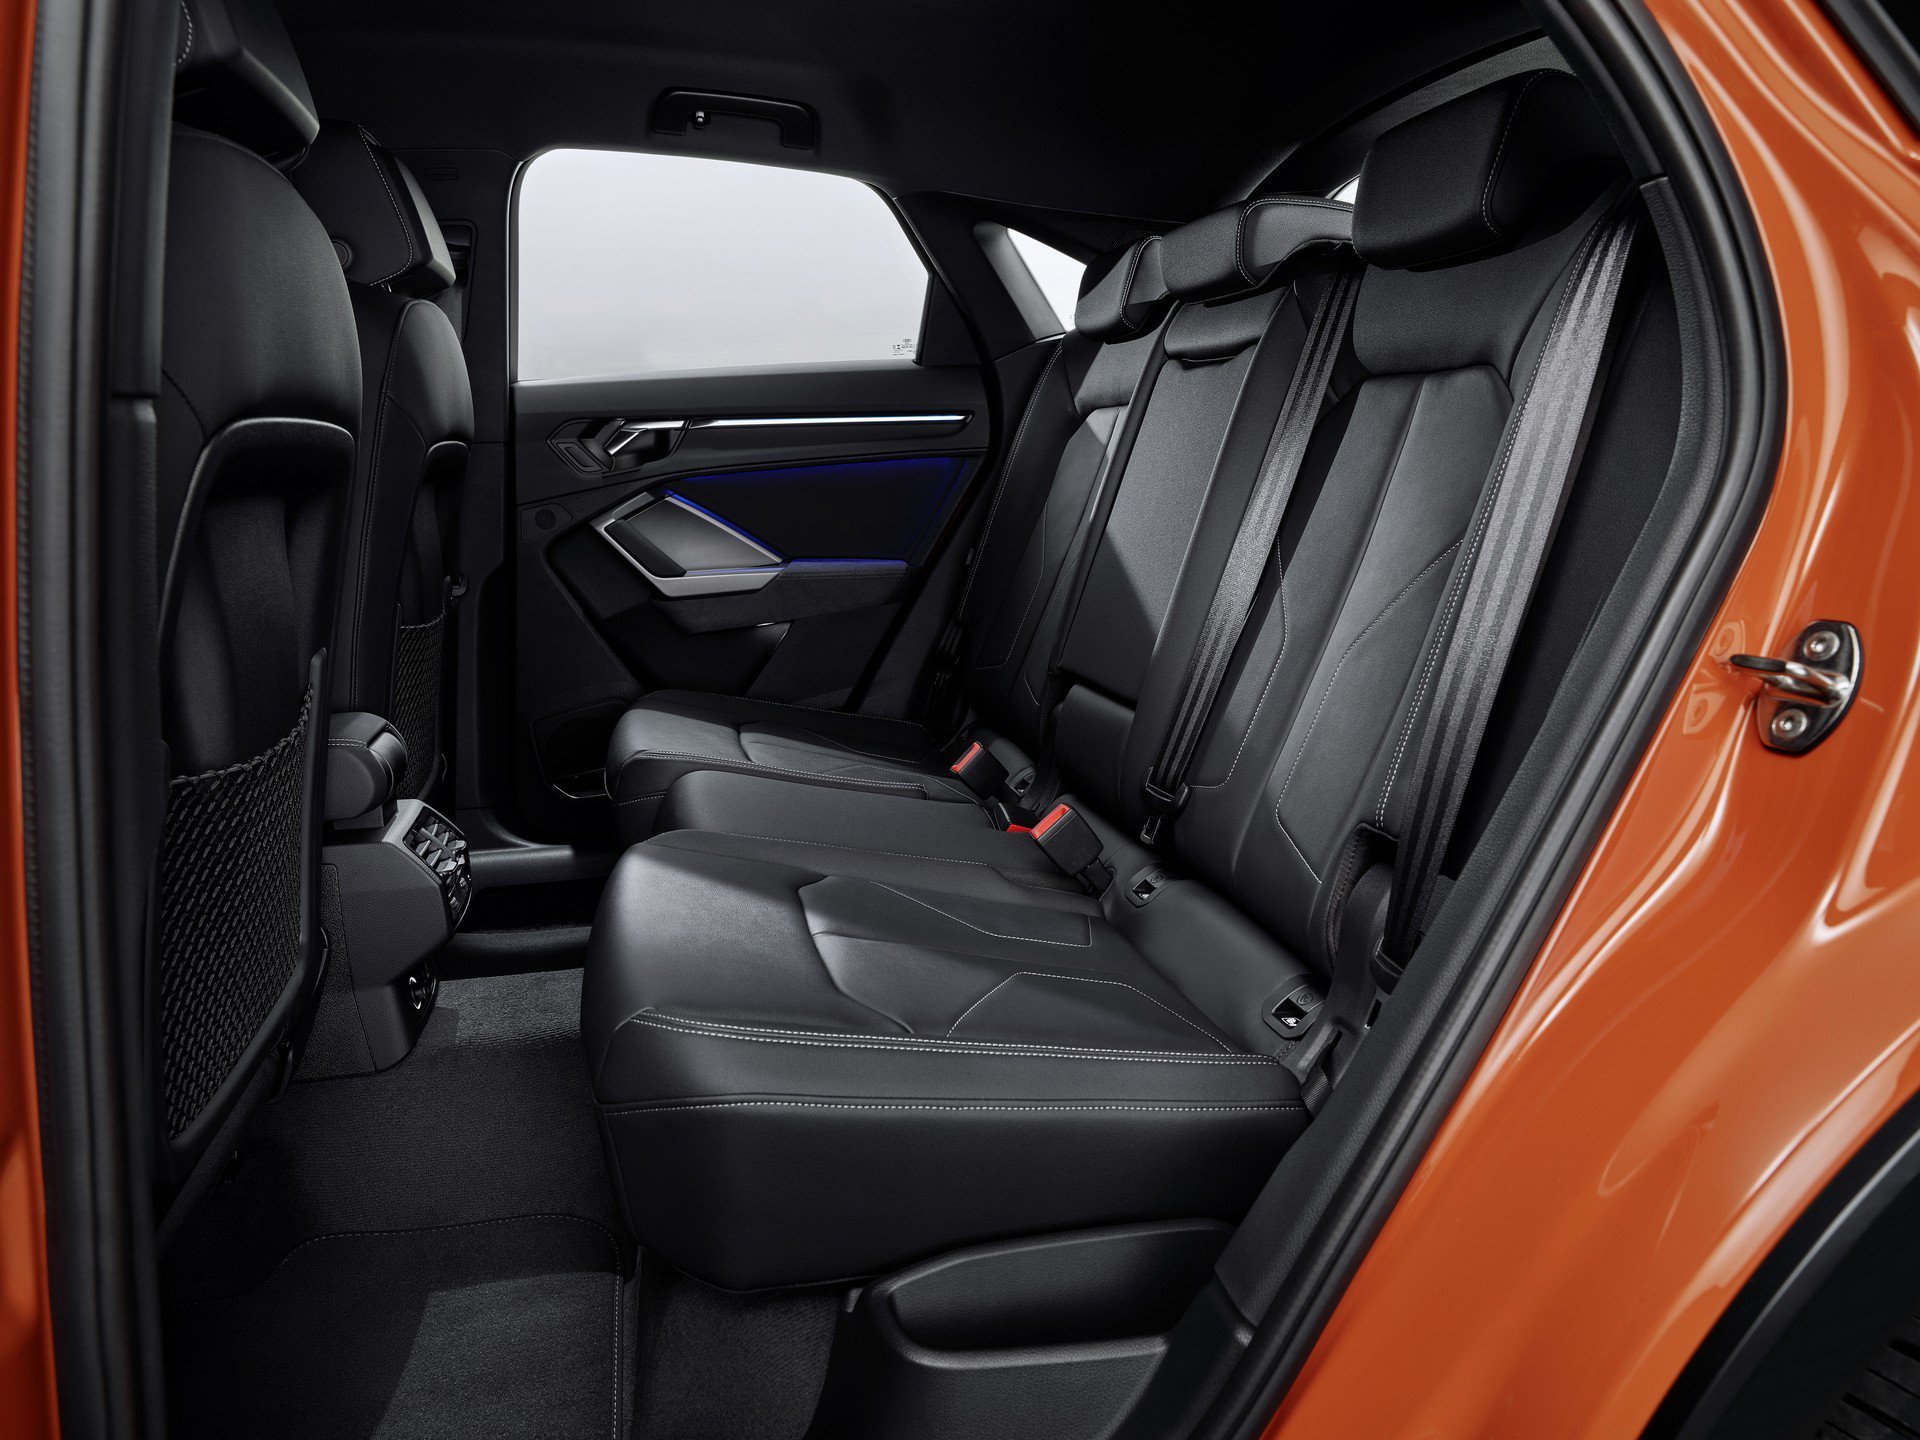 Immagine interni Audi Q3 Sportback 2019